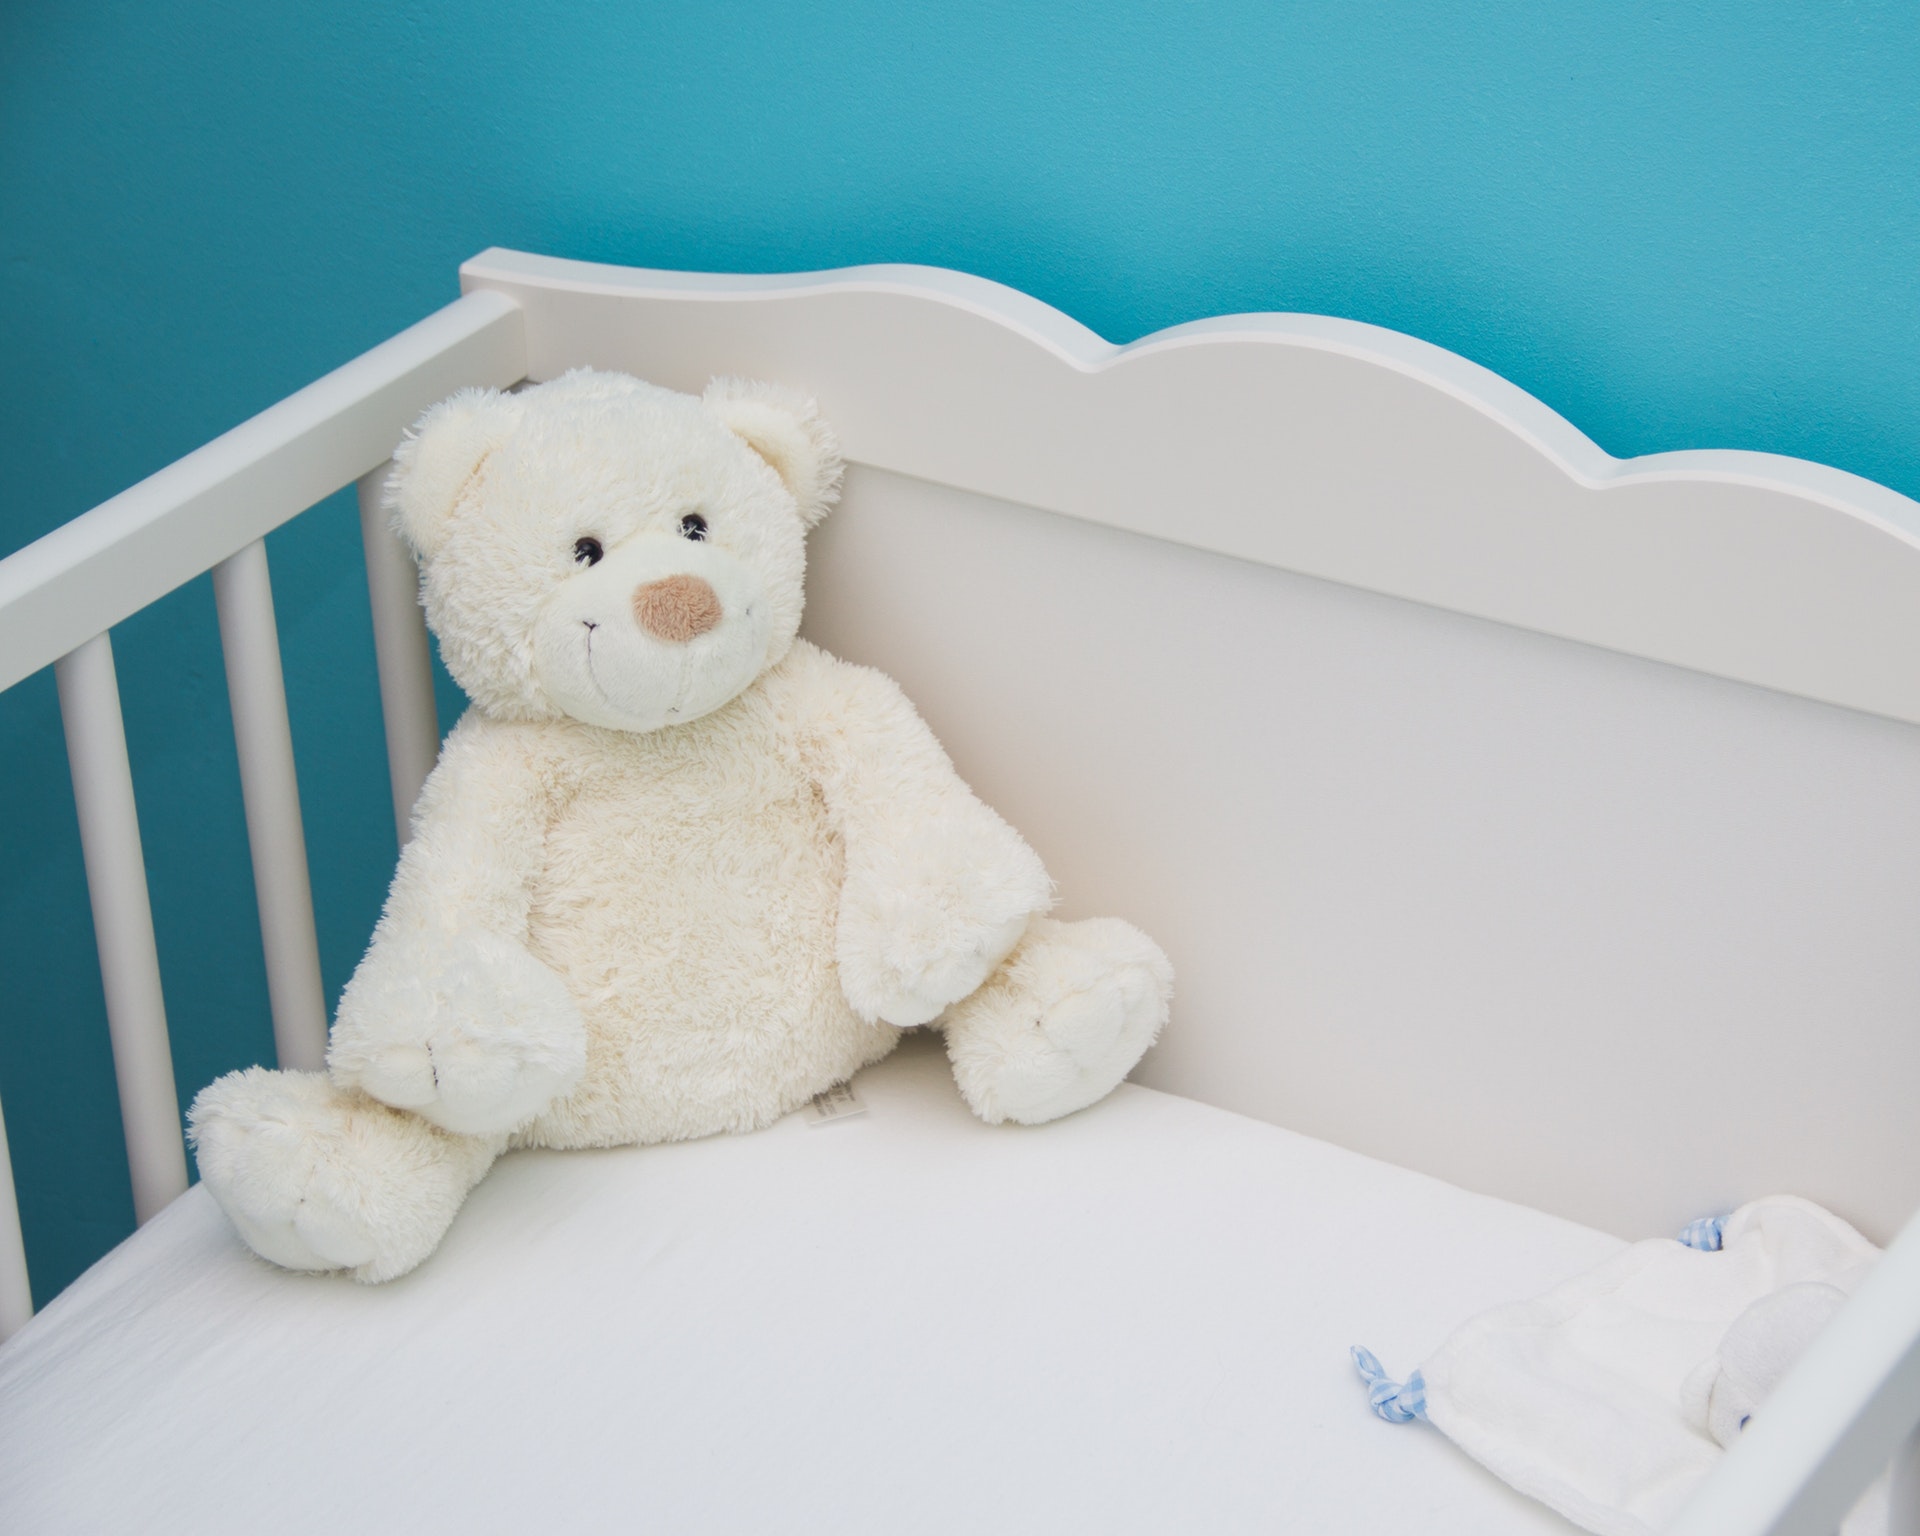 White teddy bear in crib